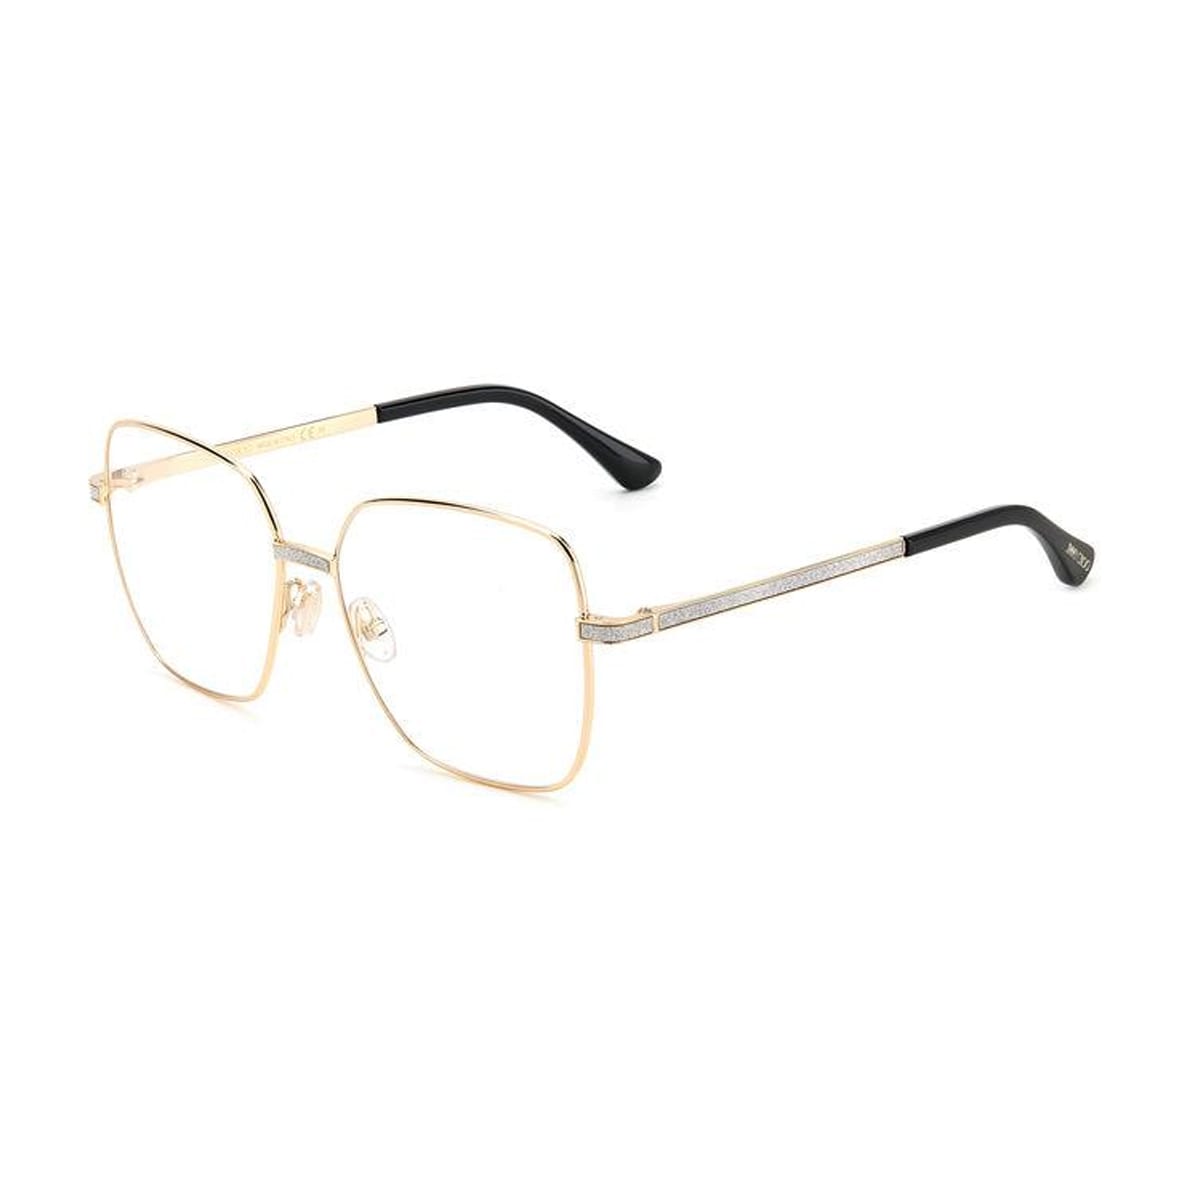 Jimmy Choo Eyewear Jc354 2m2/15 Glasses